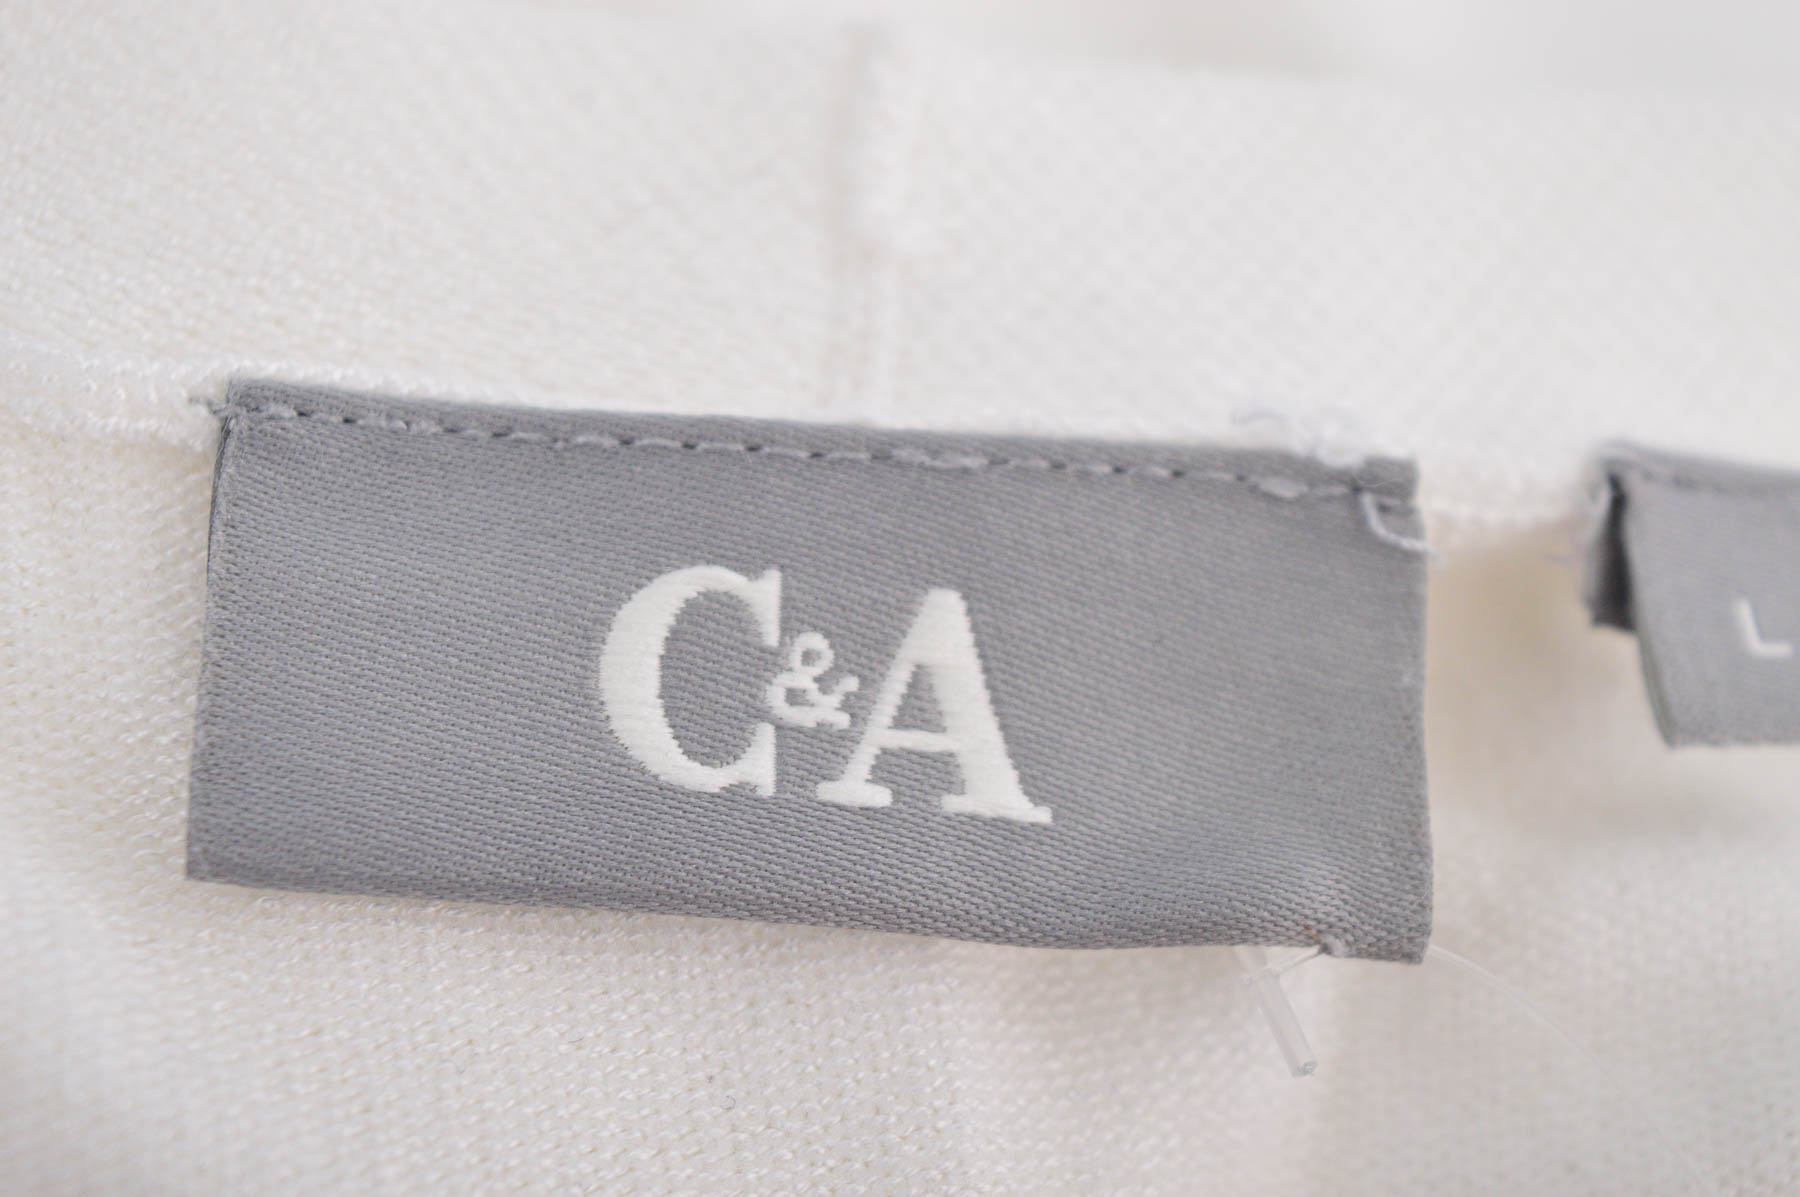 Women's cardigan - C&A - 2